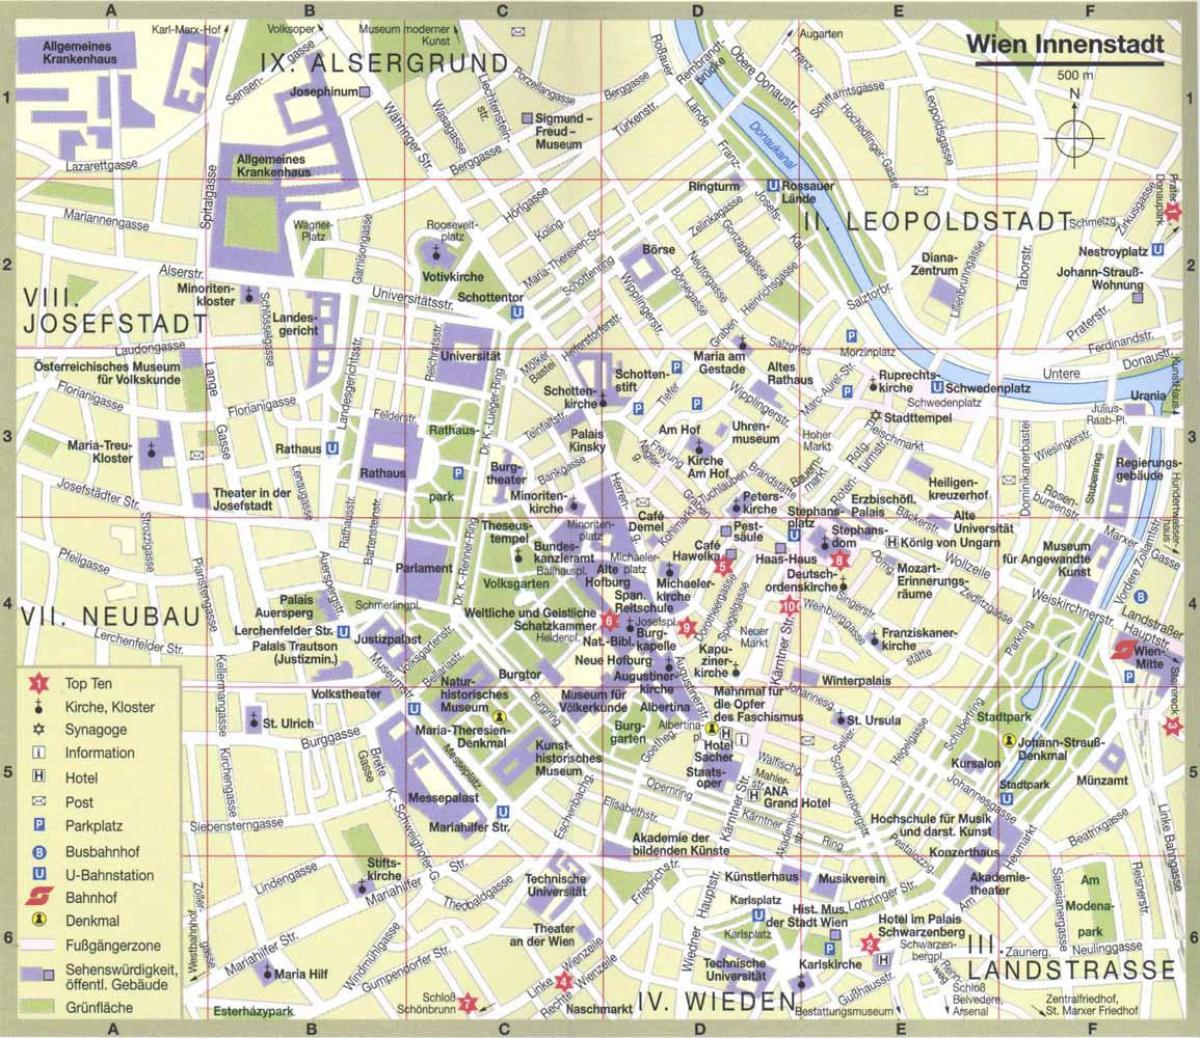 Mapa turístico da cidade de viena